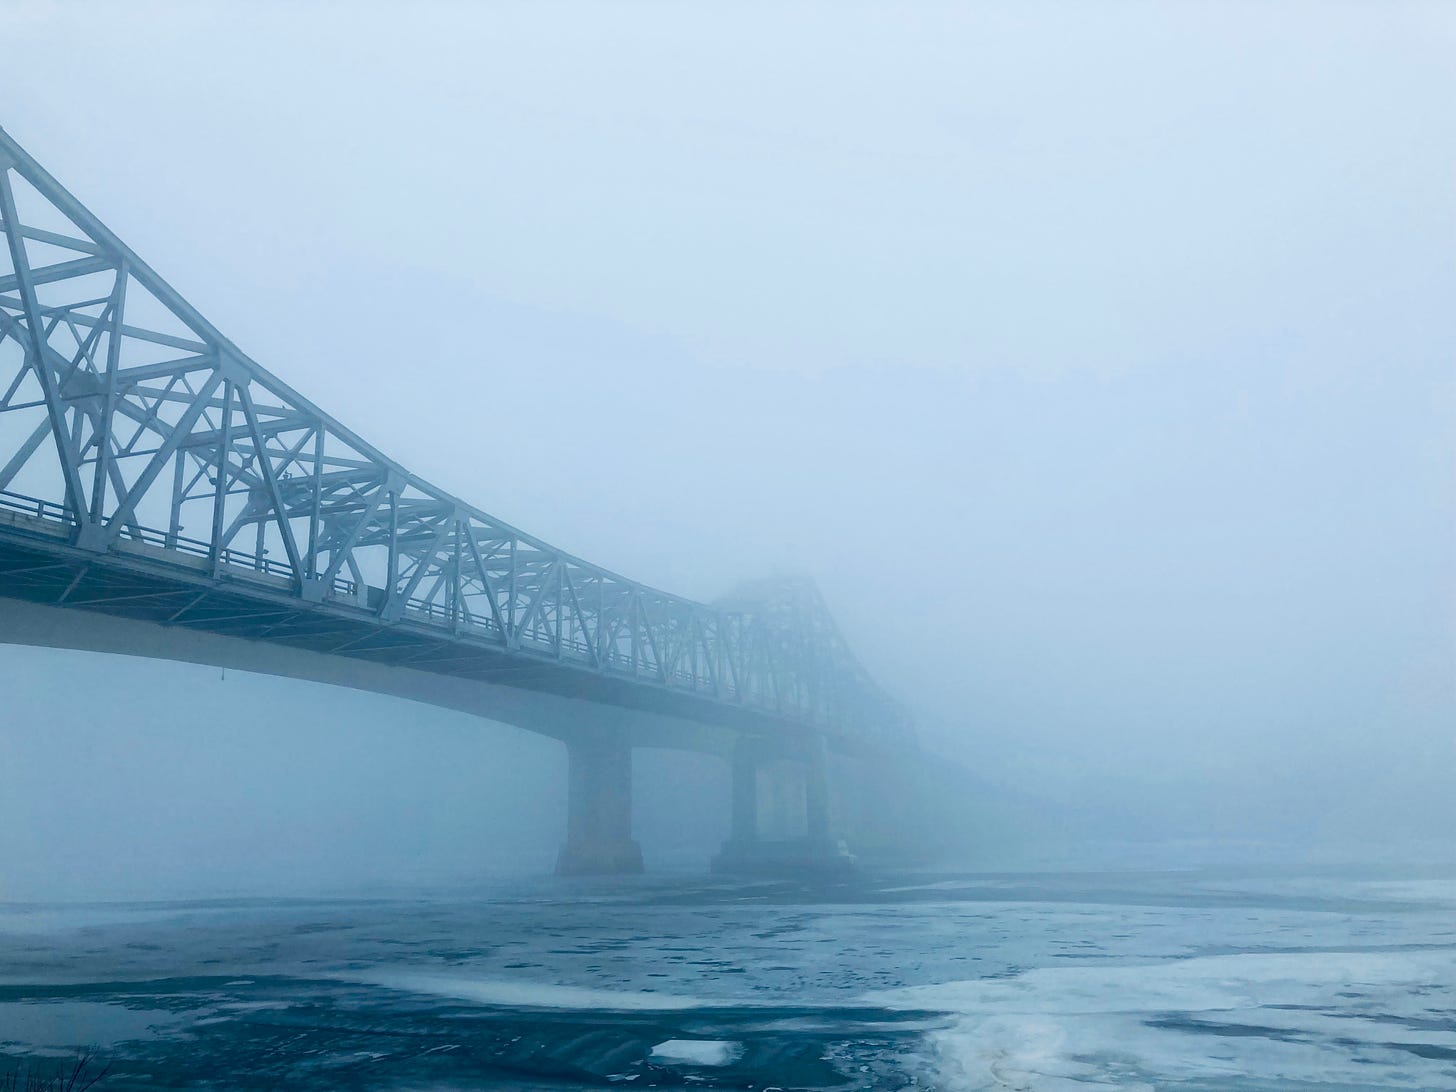 An iron bridge spans an icy river, stretching into a dense fog